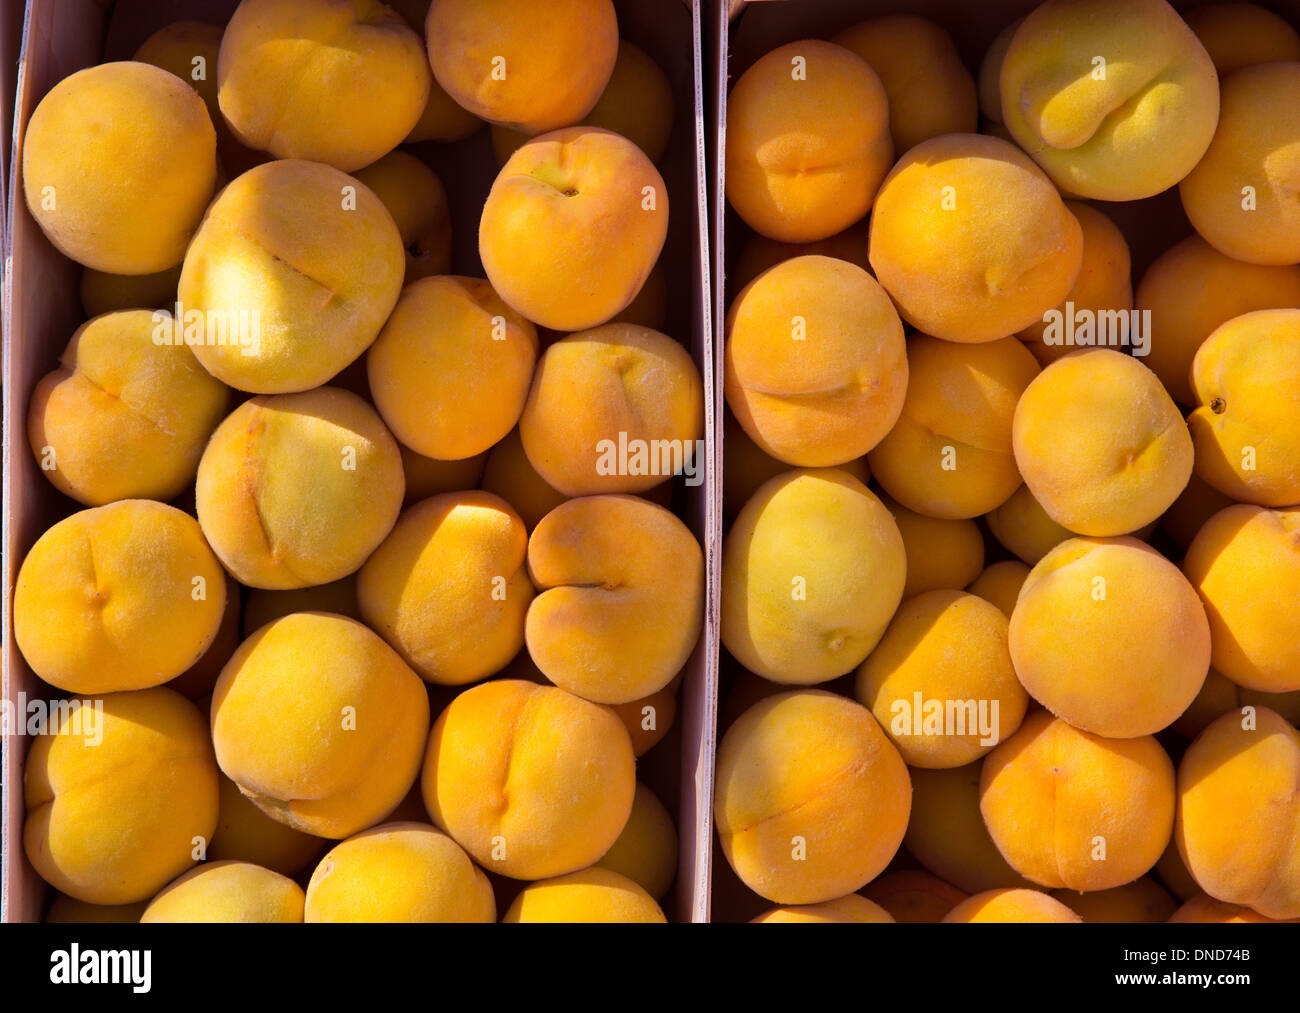 Calanda peaches rainfed from Teruel Spain in baskets at market Stock Photo